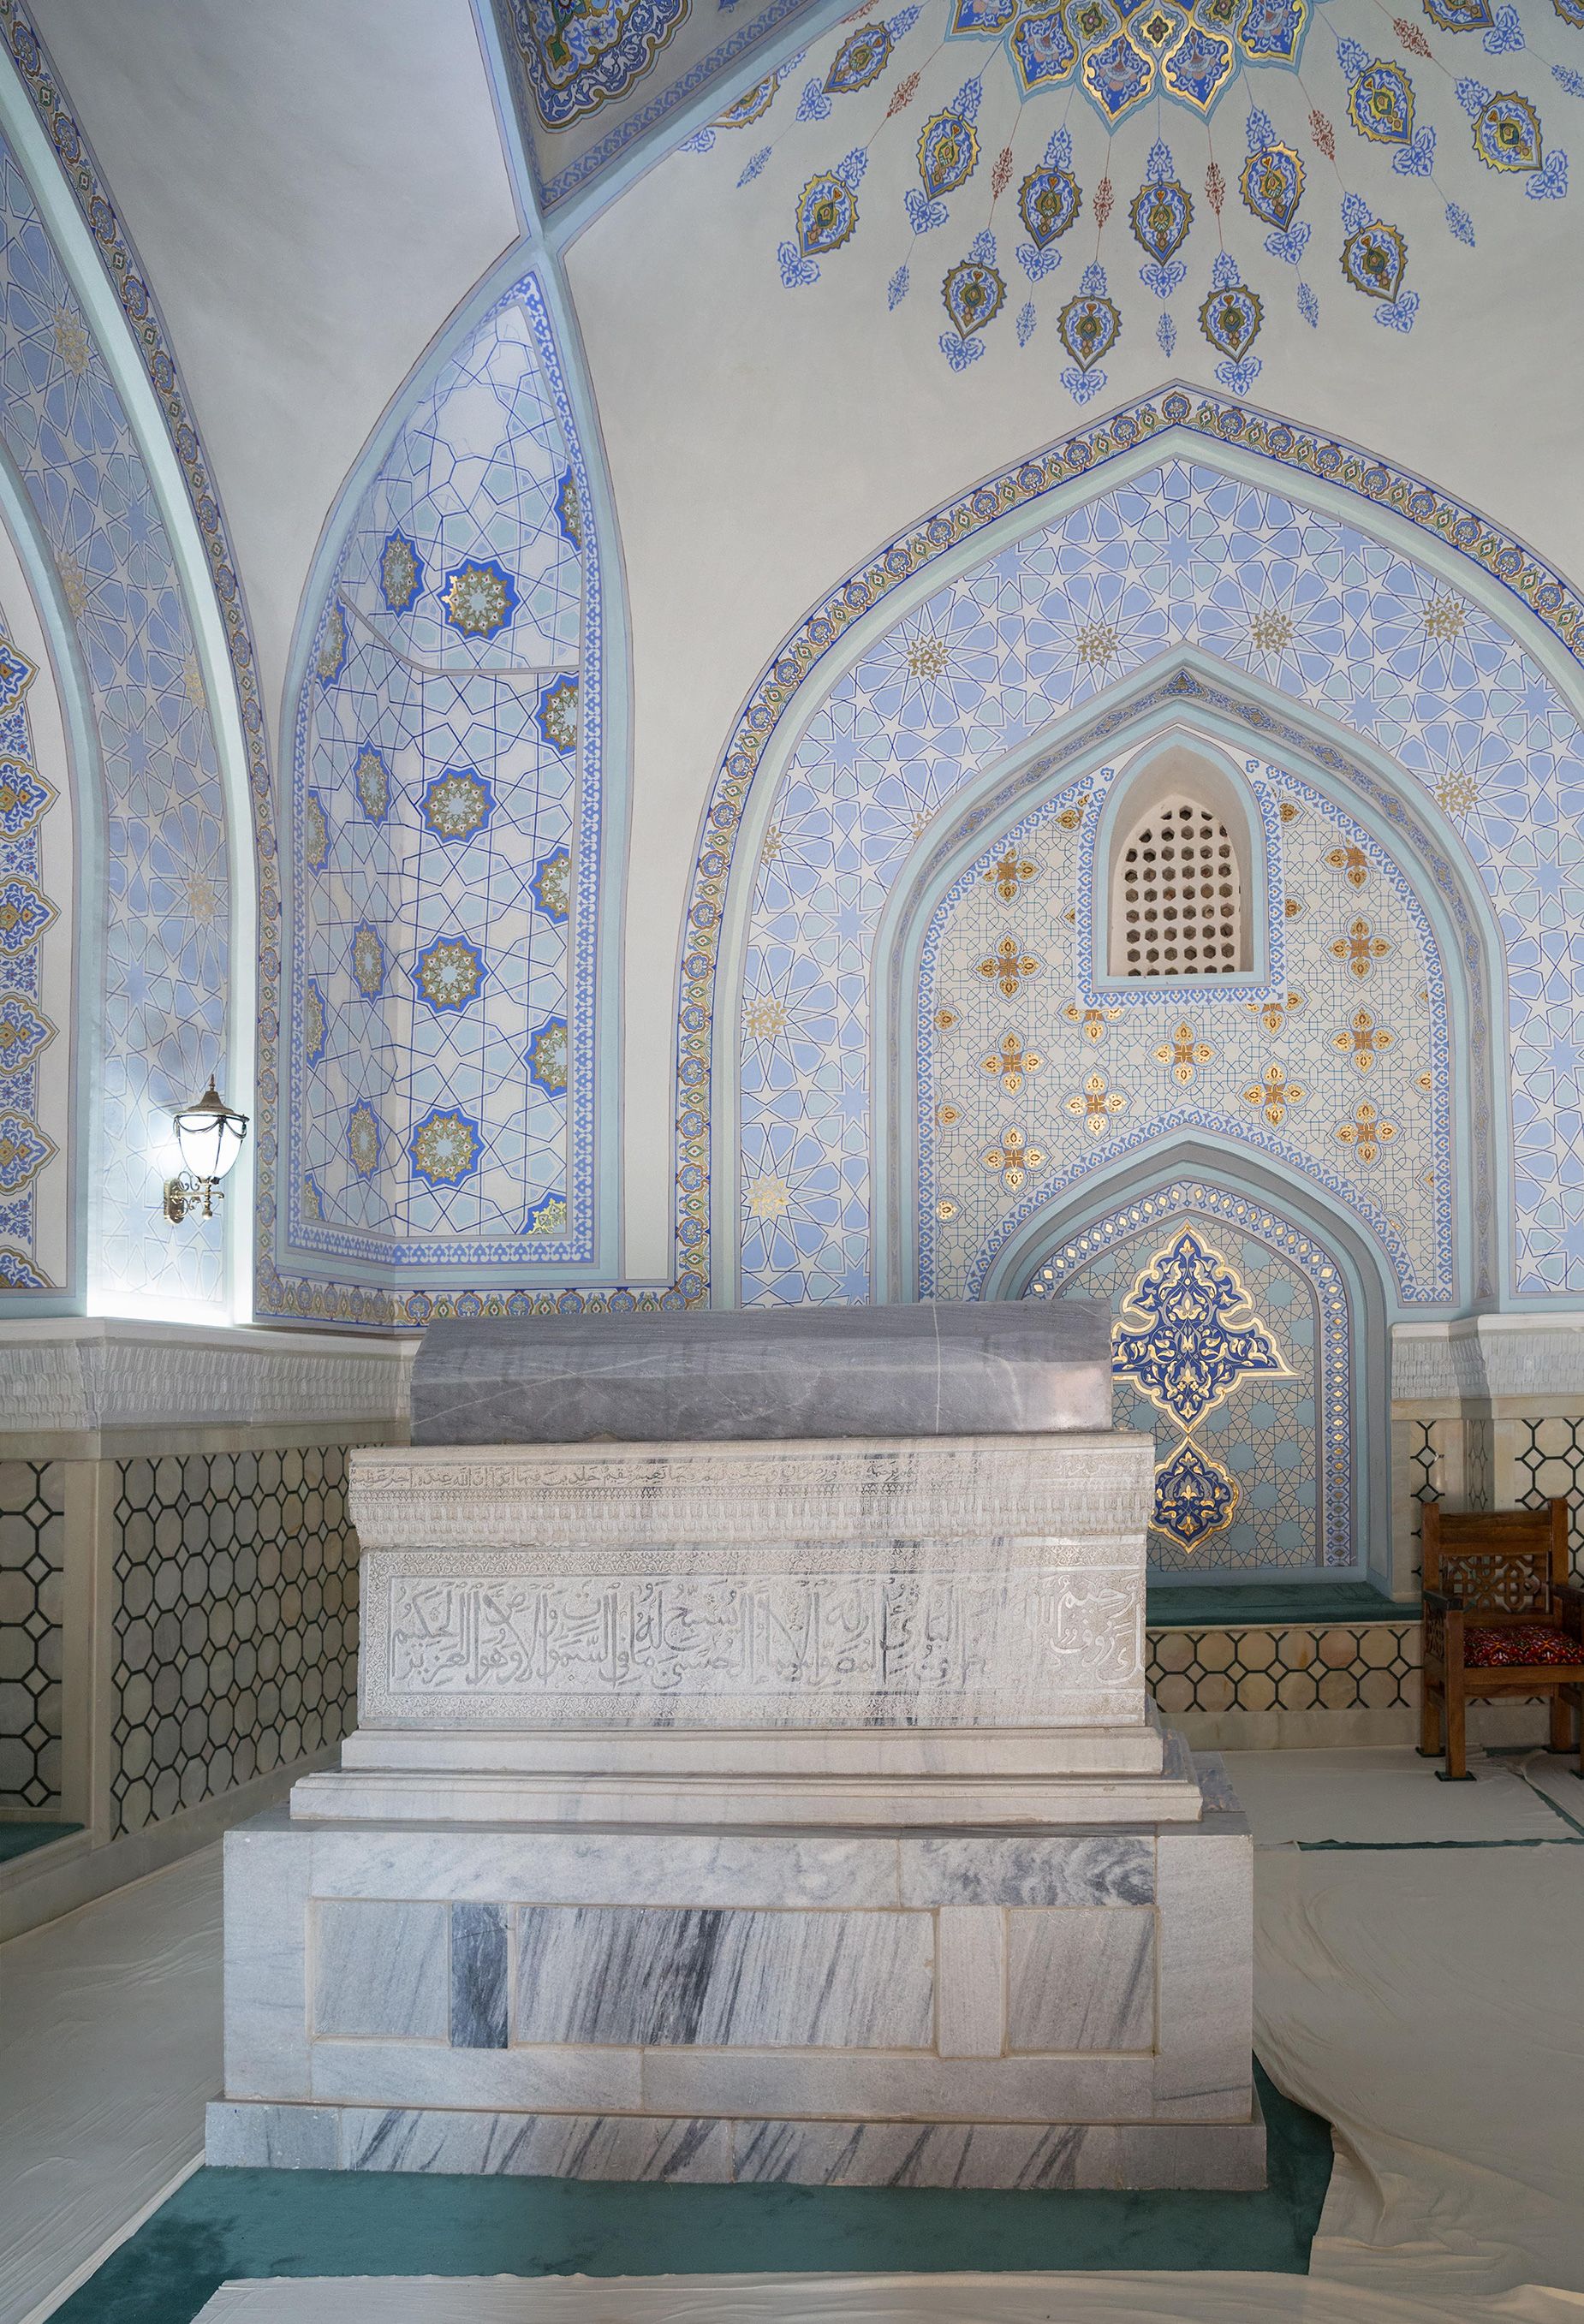 The Dorut Tilavat Complex in Shakhrisabz contains the mausoleum of Sheikh Shamsiddin Kulol.